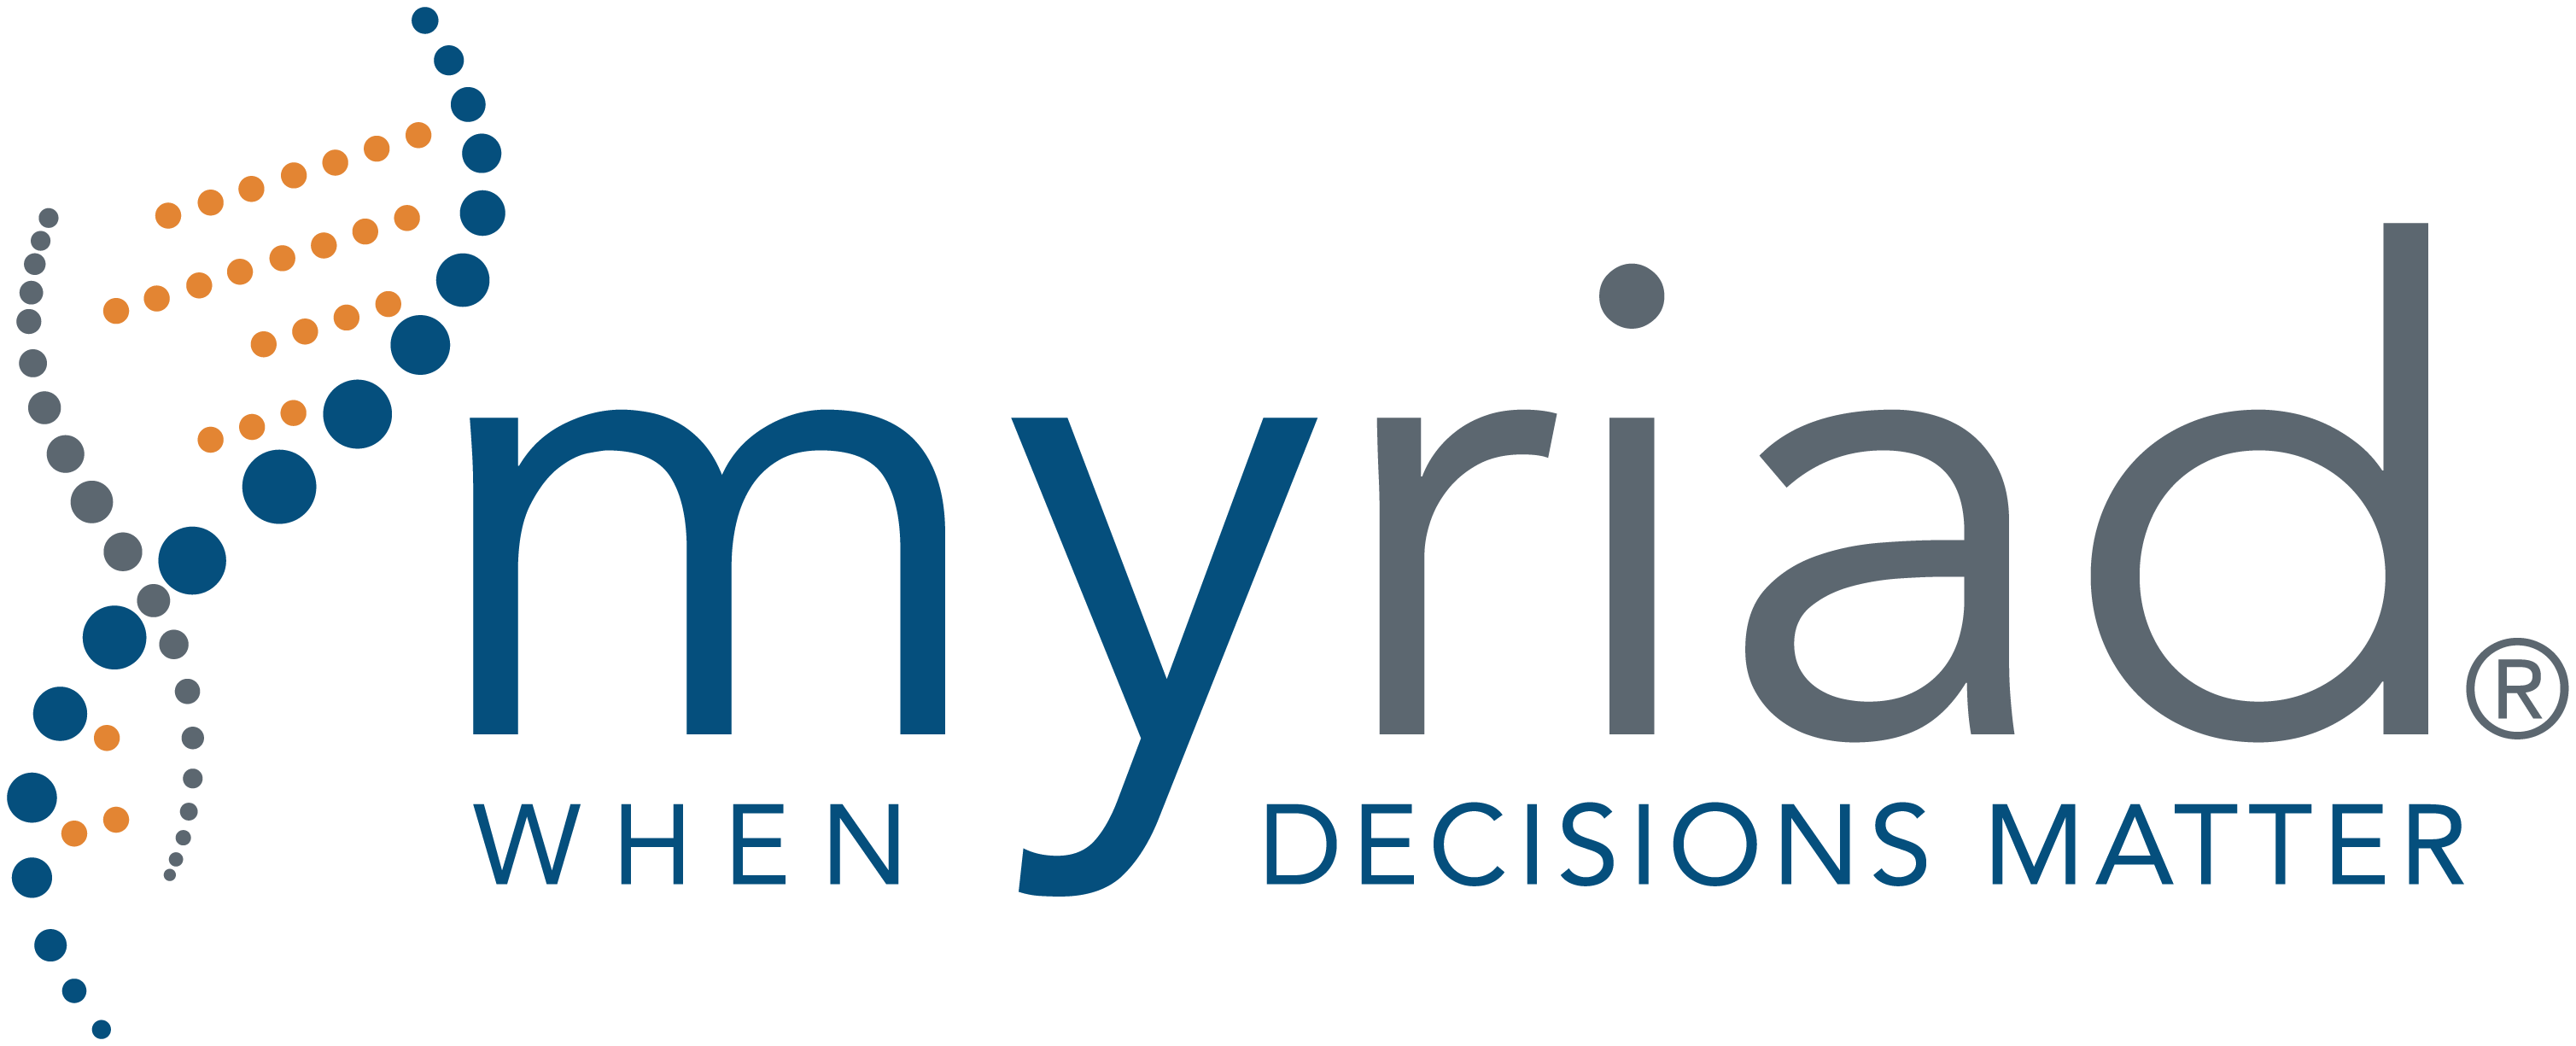 Myriad Genetics Company Logo